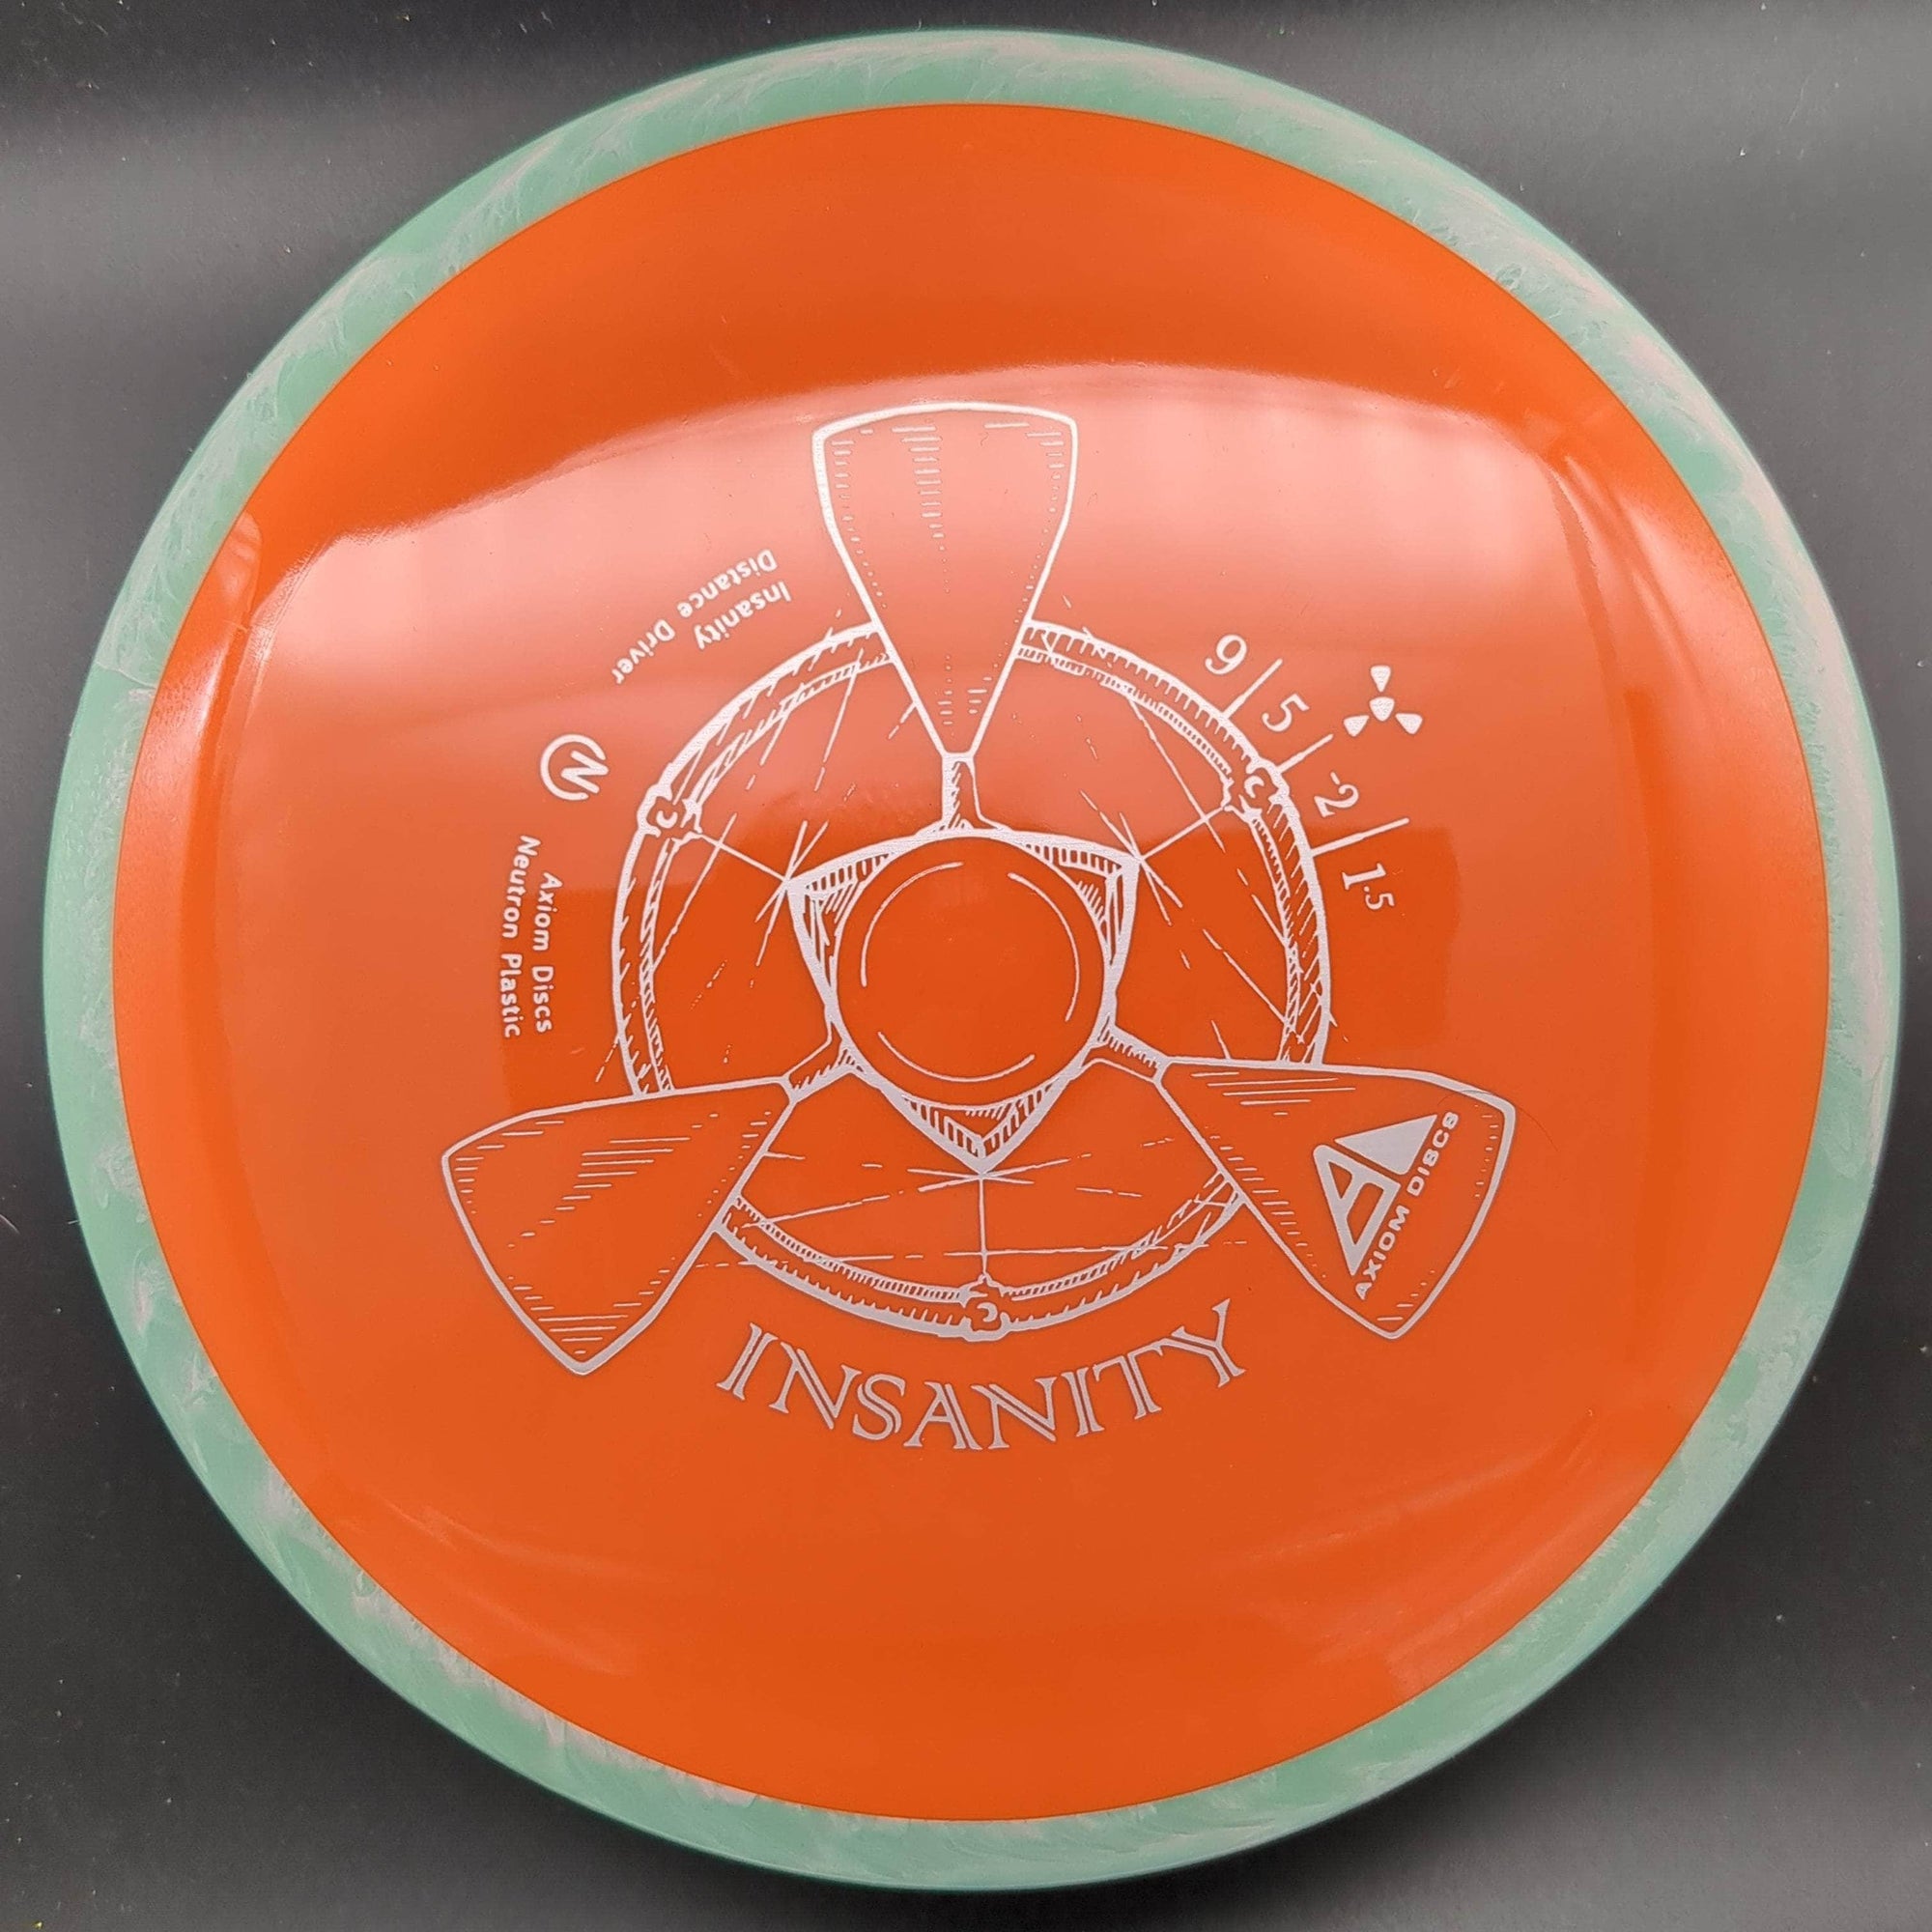 MVP Fairway Driver Orange Teal/White Rim 172g Insanity, Neutron Plastic